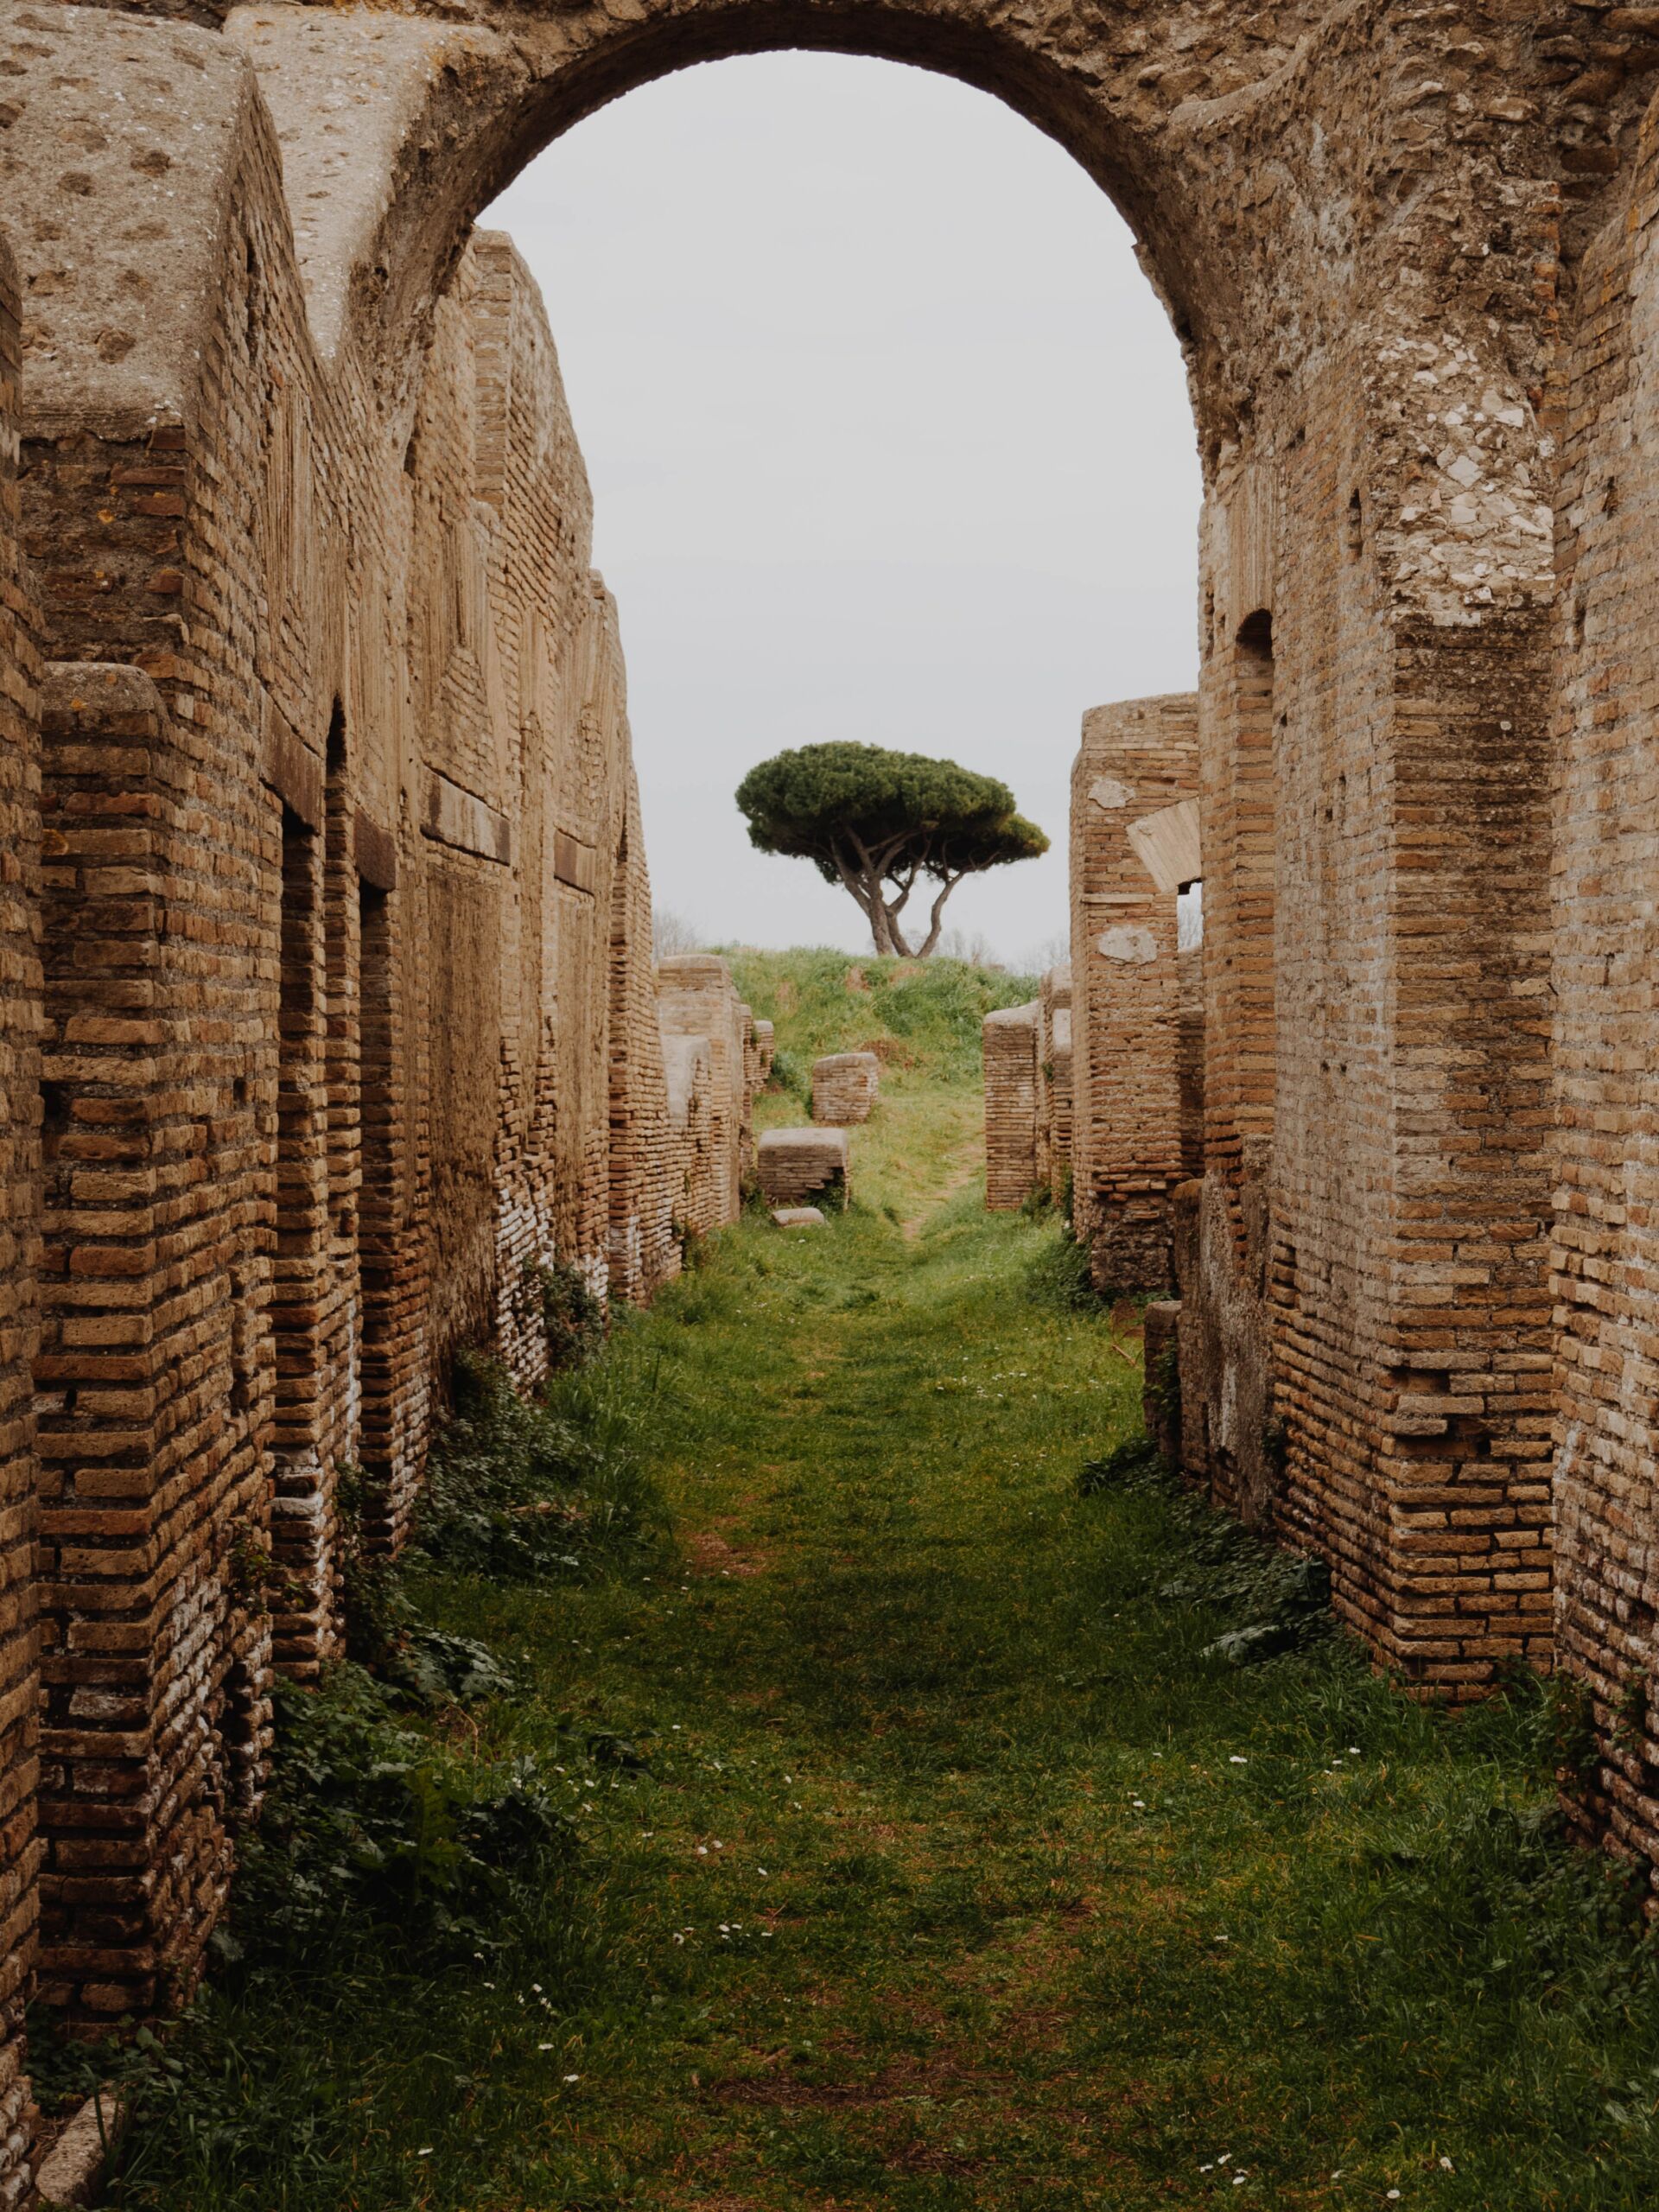 Photos of the ruins of a Roman aqueduct